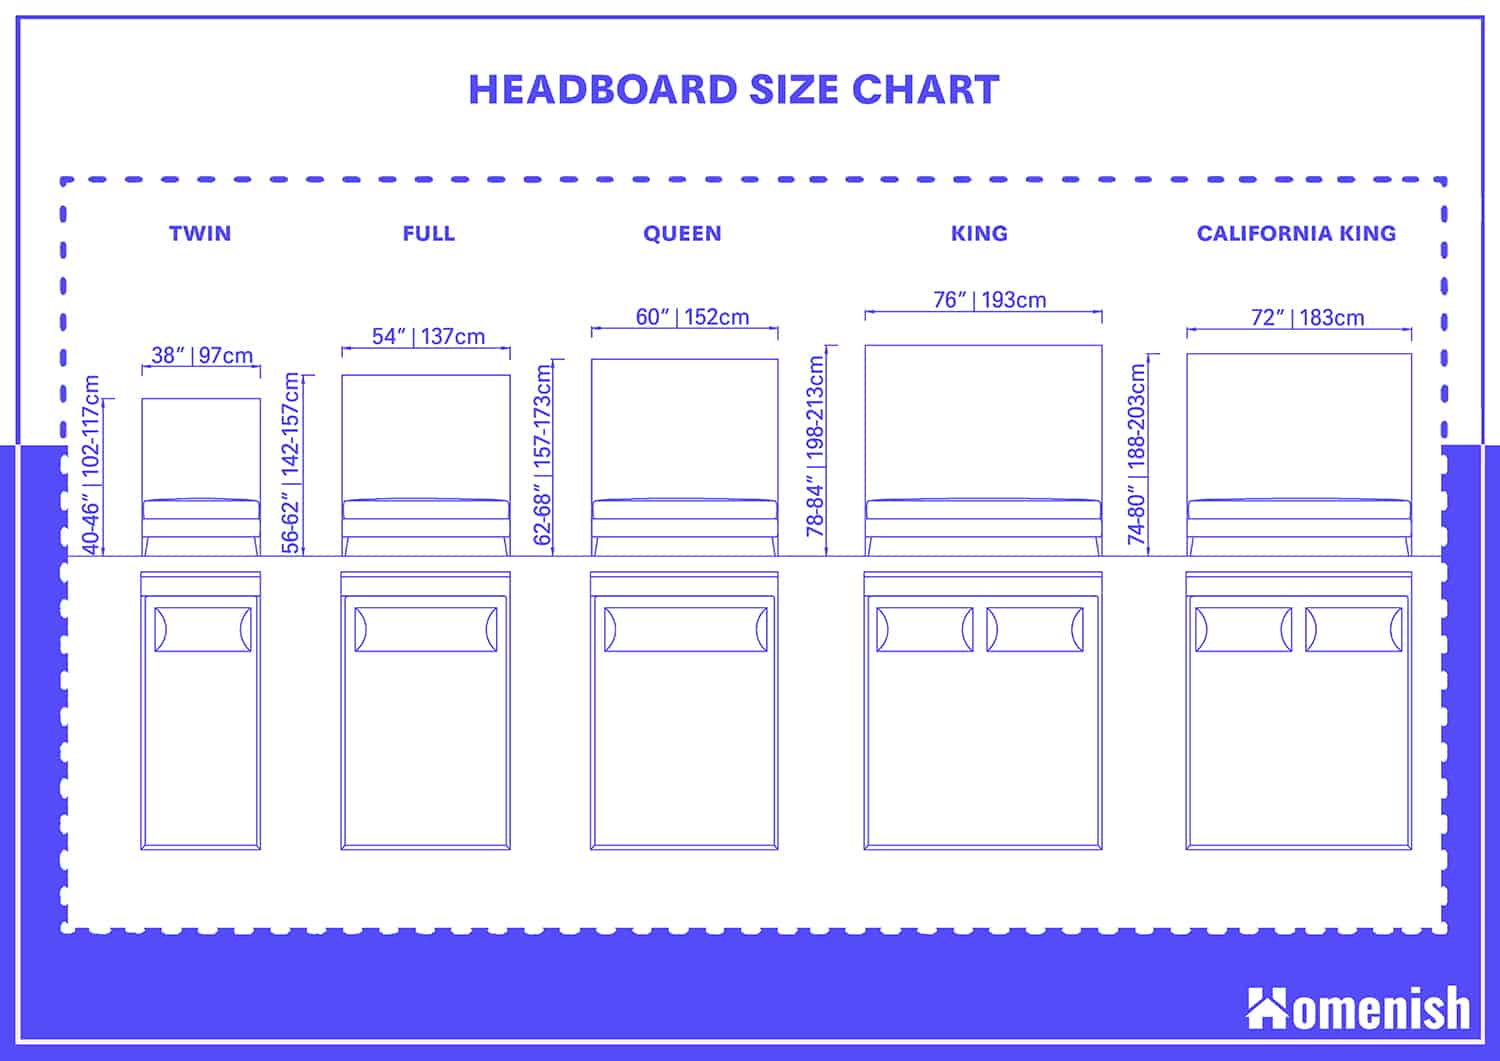 Standard Headboard Dimensions, Twin Bed Headboard Size